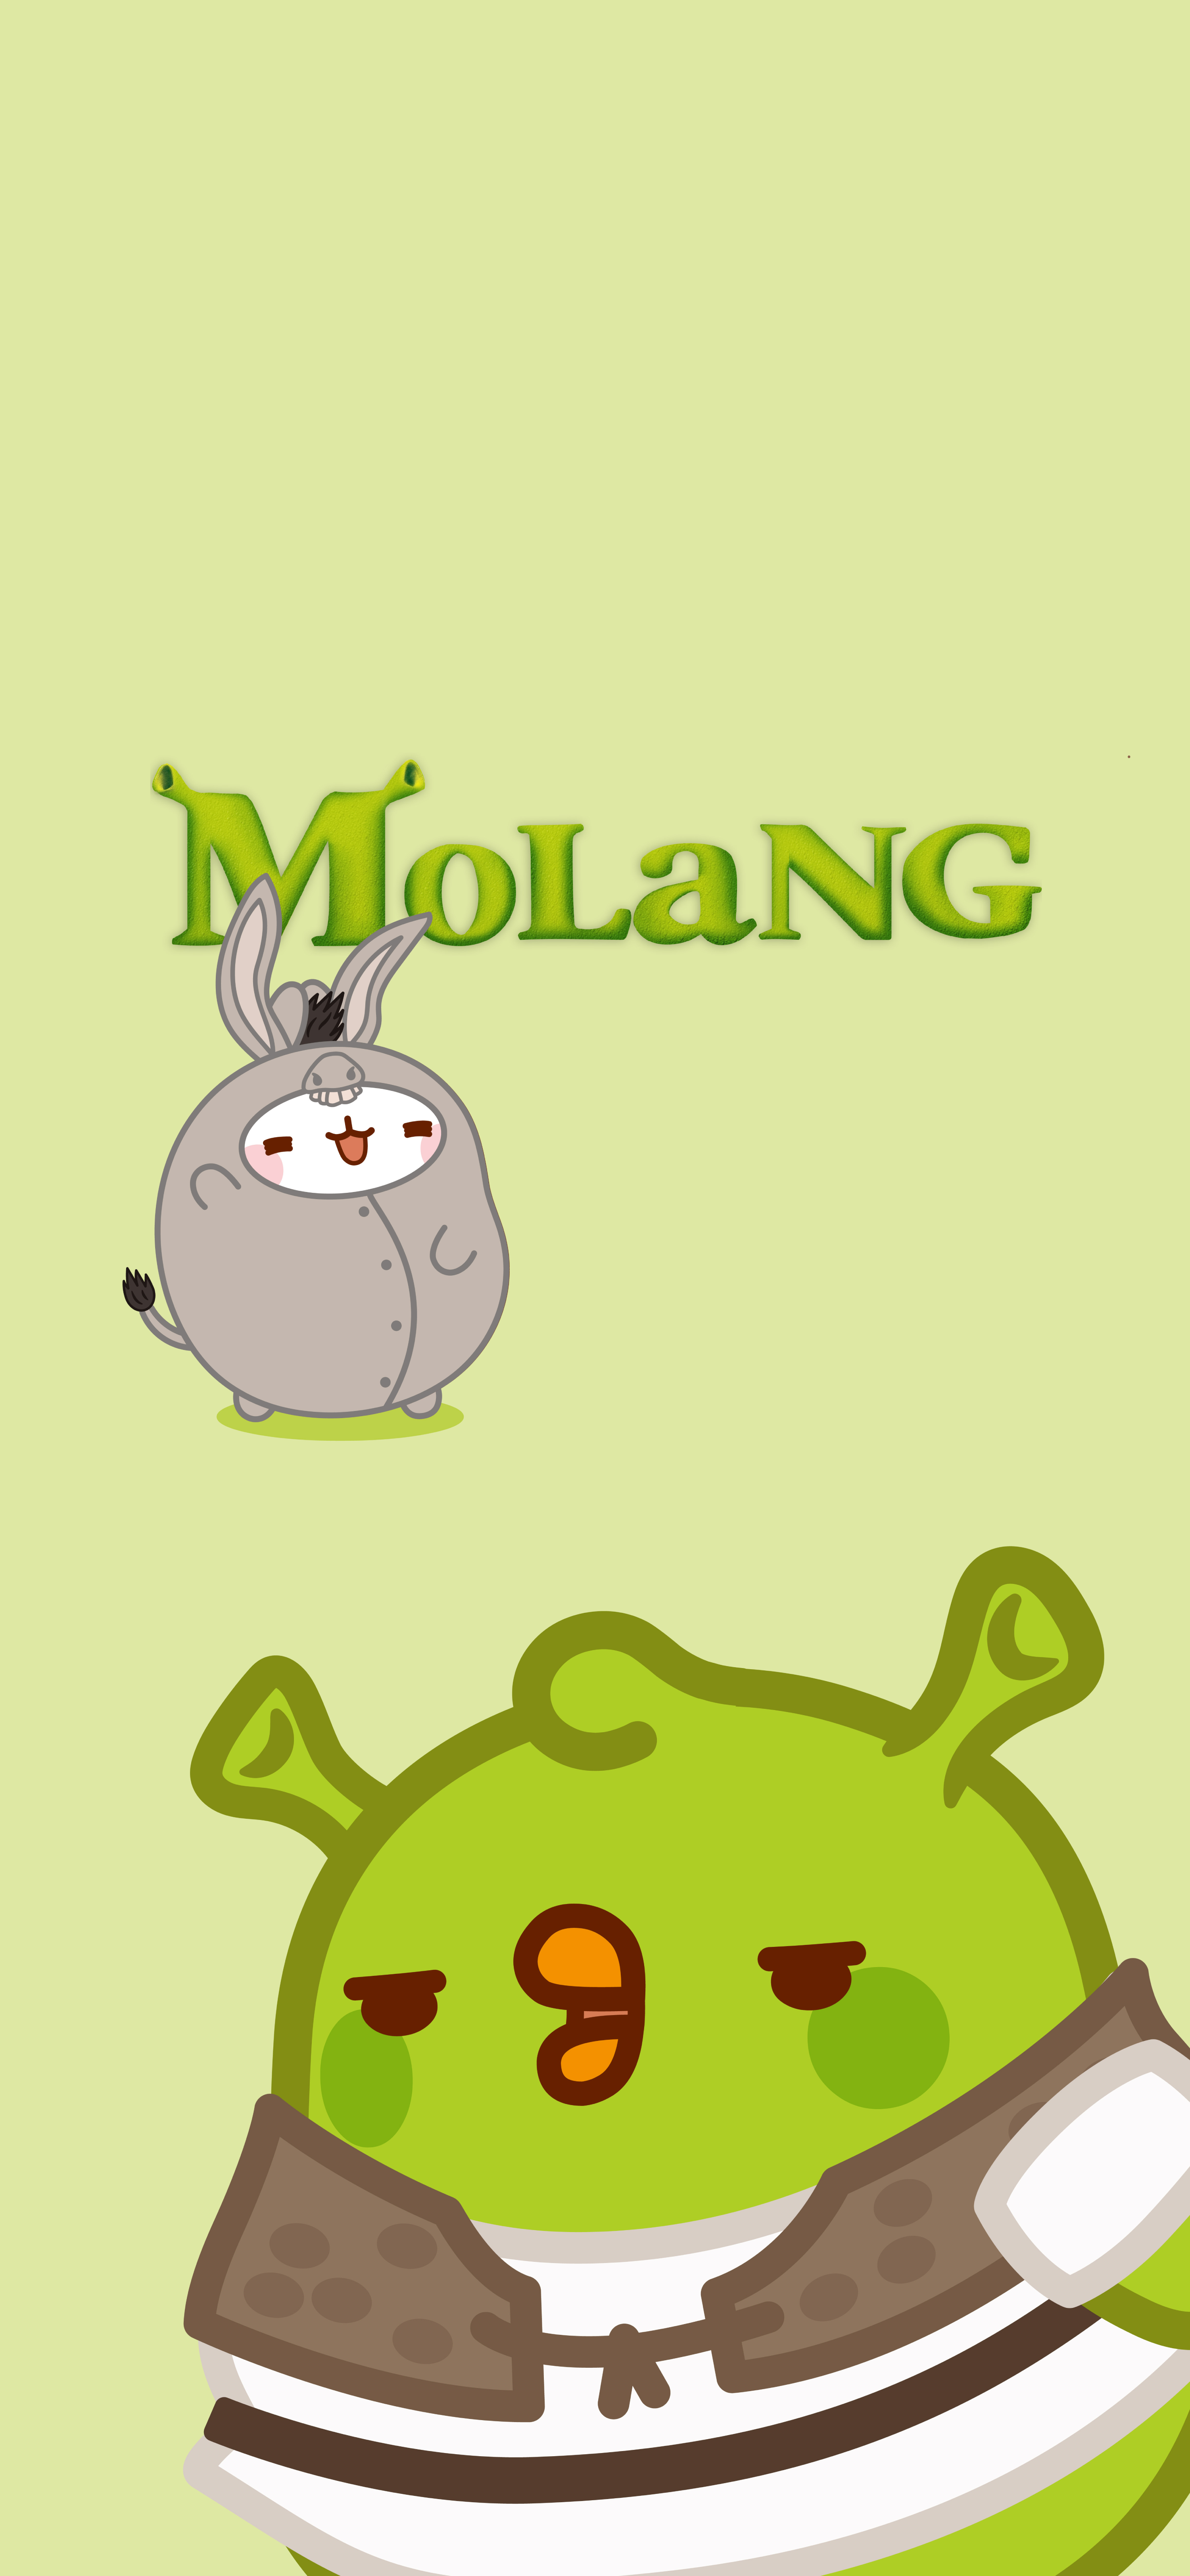 Molang Parody Wallpapers: Discover The Among Us Wallpaper of Molang